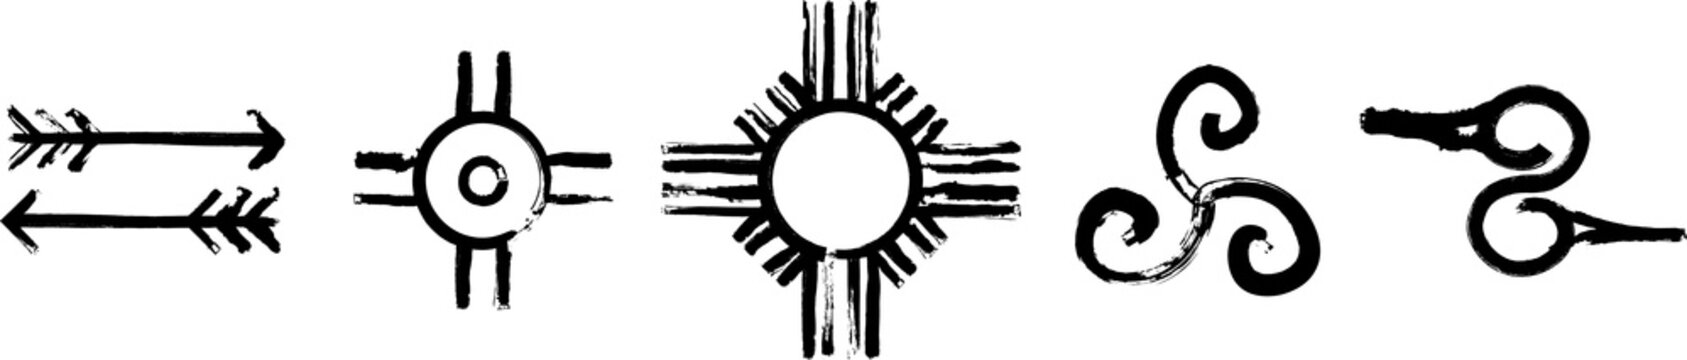 Most popular Native American Symbols. Symbols of War, Happy, Sun, Homecoming, and Hand. Set of the ancient symbols. Black ink handwriting. Vector